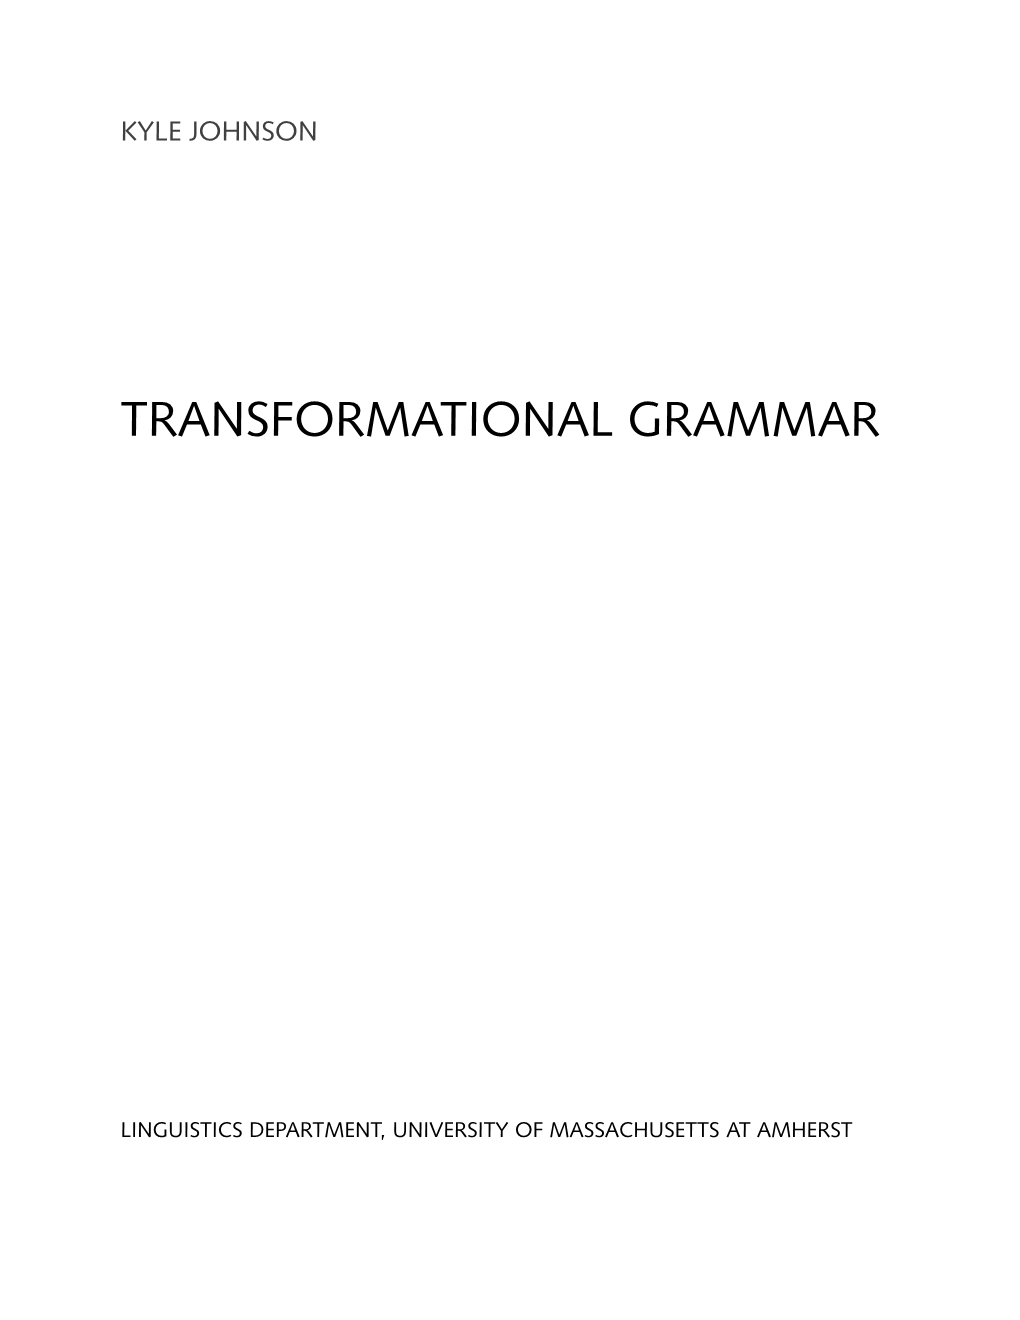 Transformational Grammar